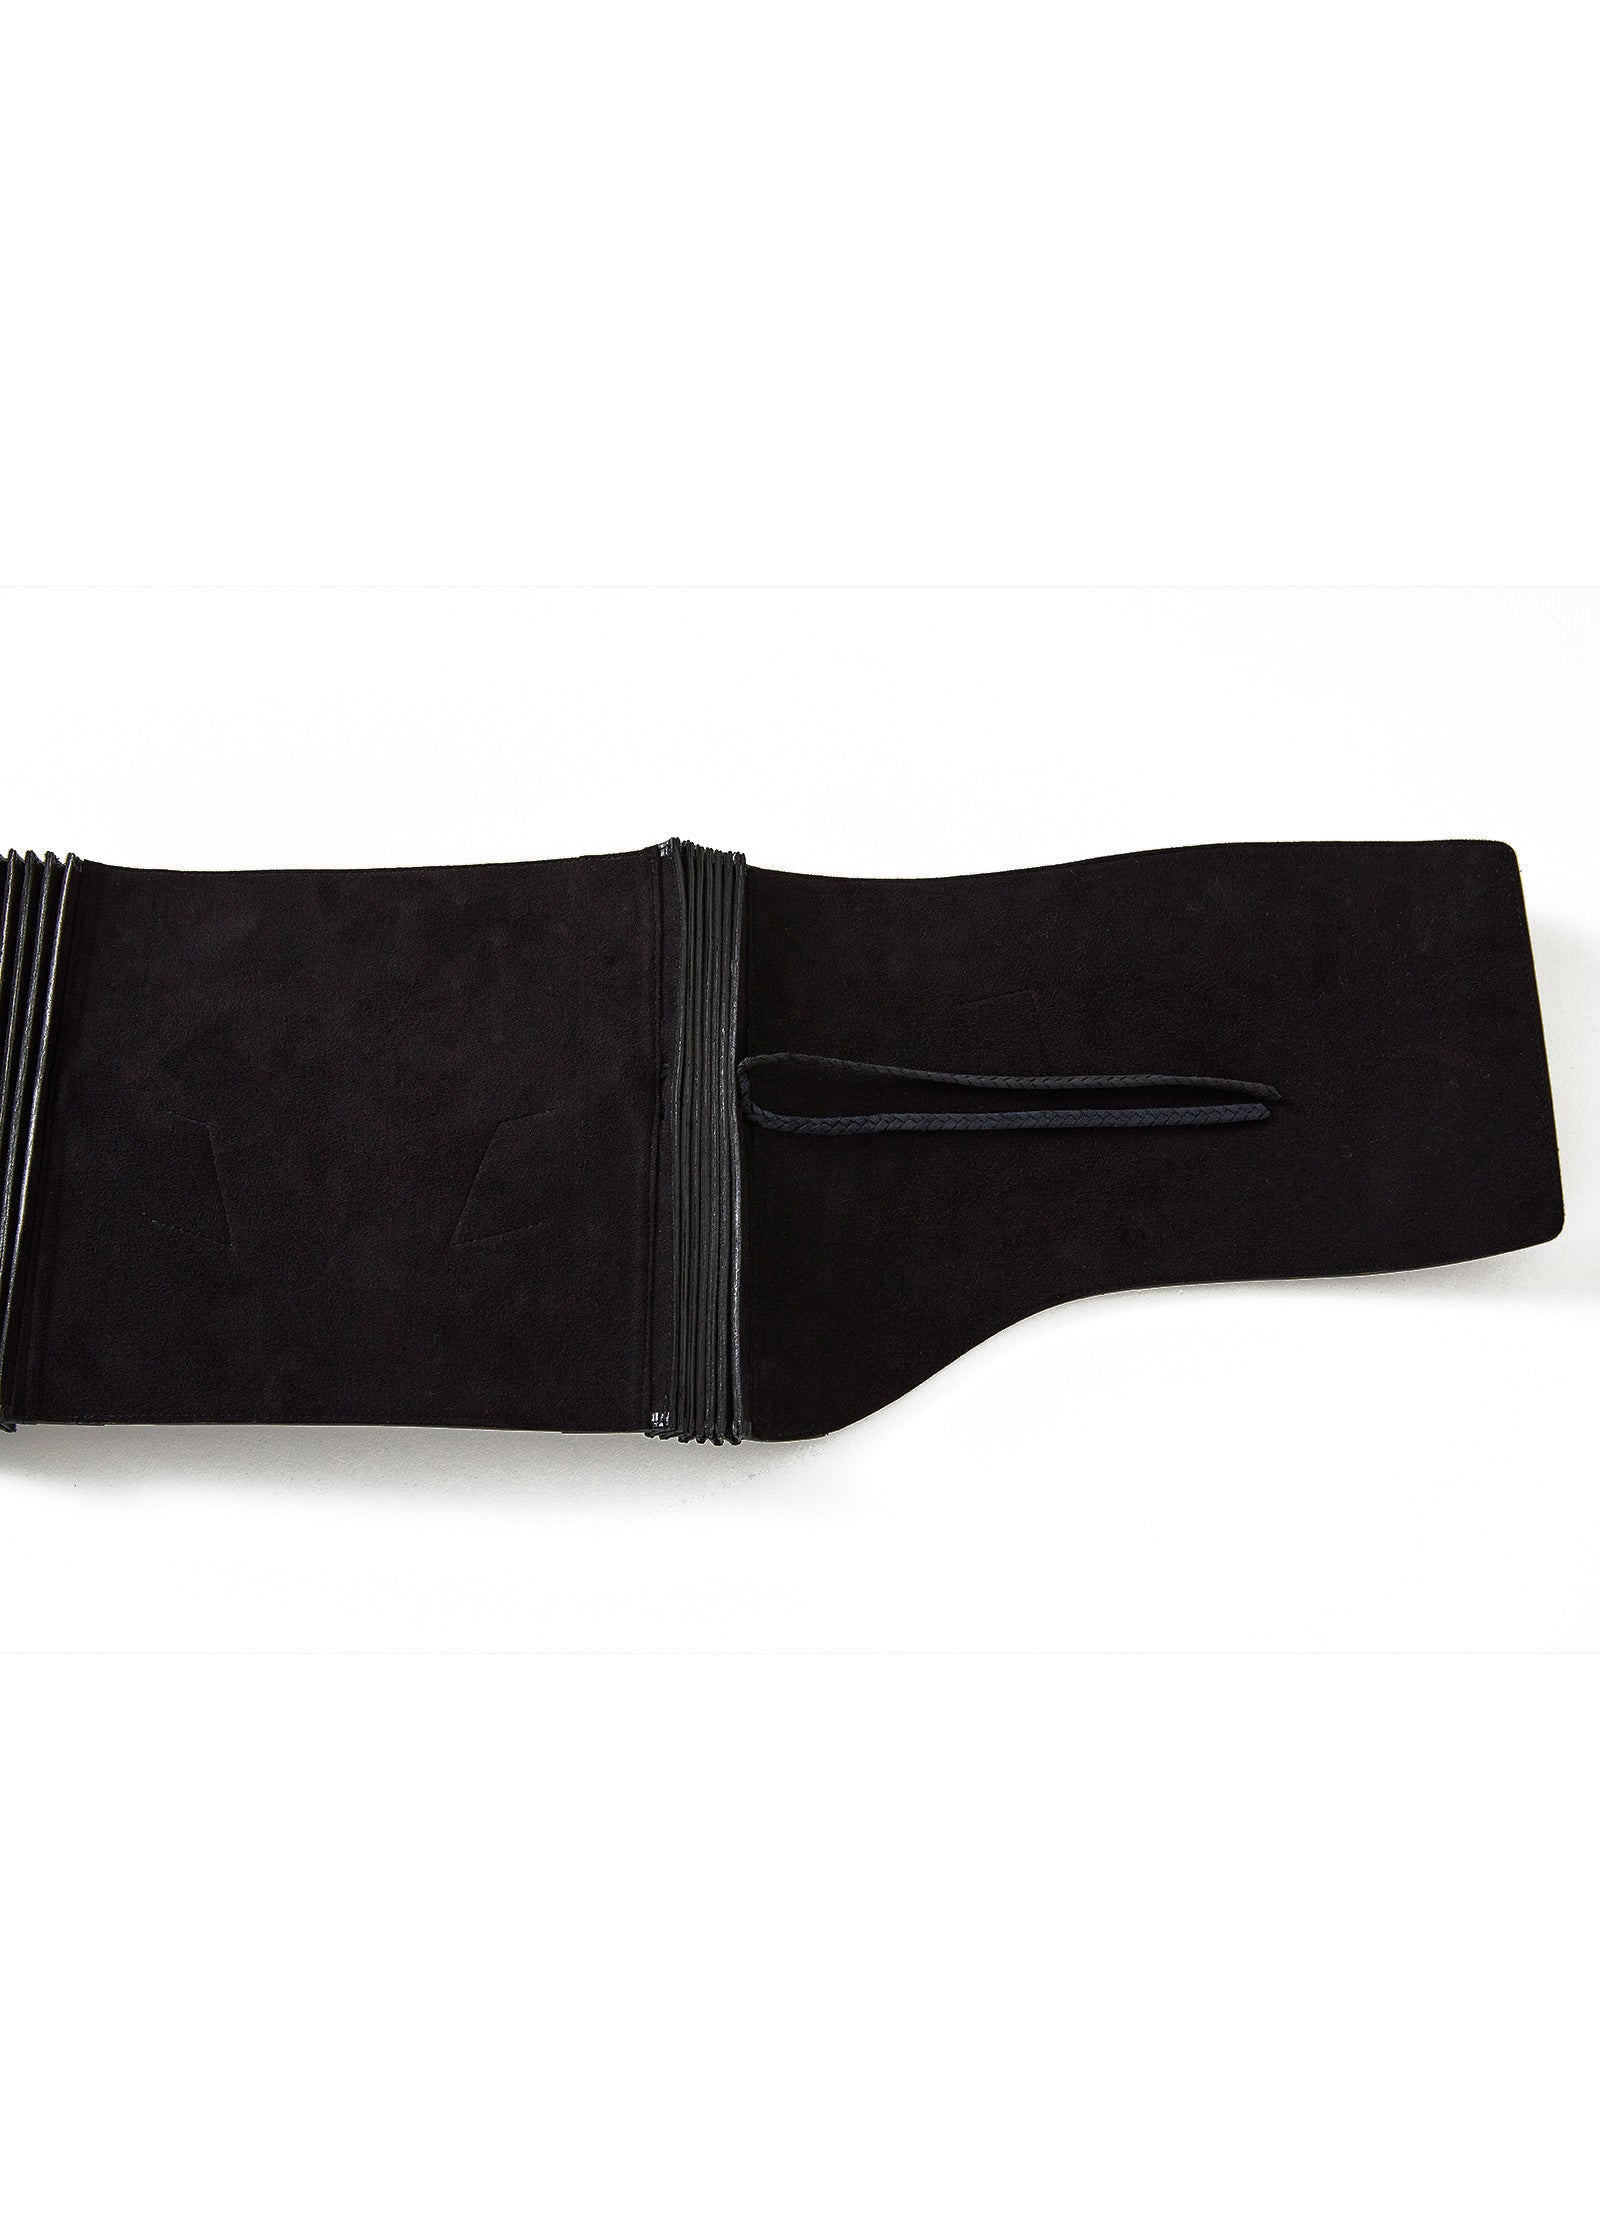 Obi belt "black" leather [ready to ship]